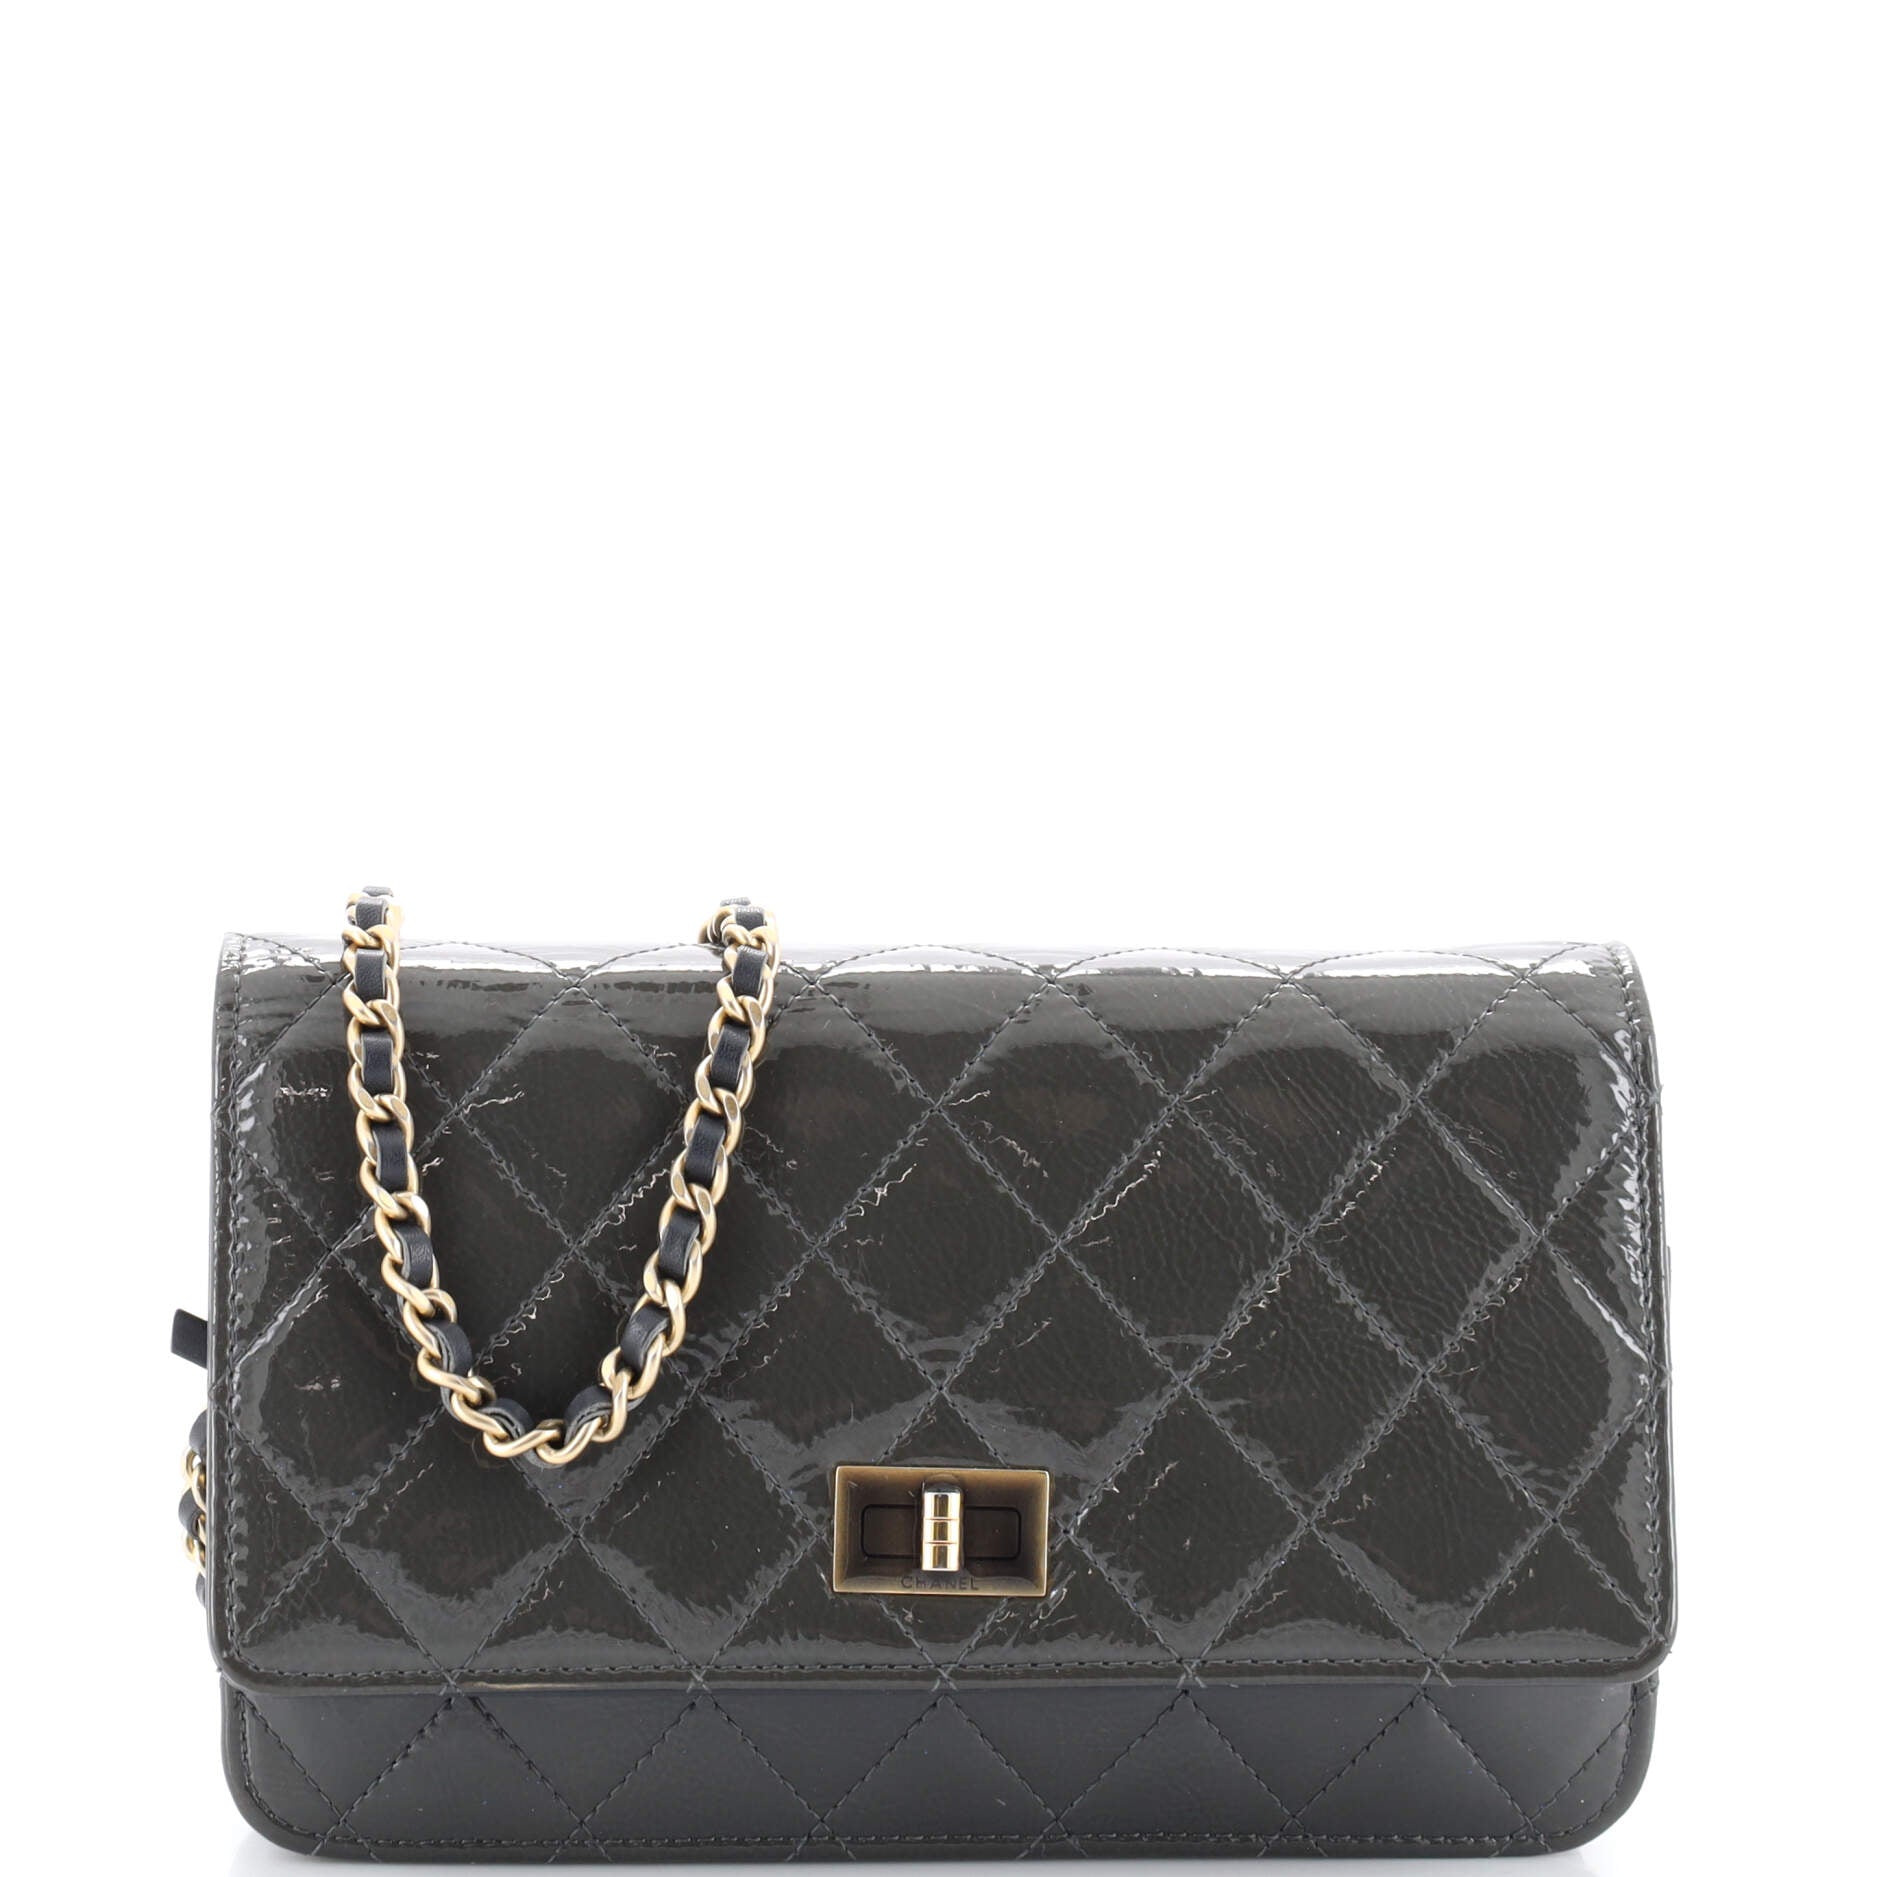 Chanel, Inc. Chanel 22 mini handbag, Shiny calfskin & gold-tone